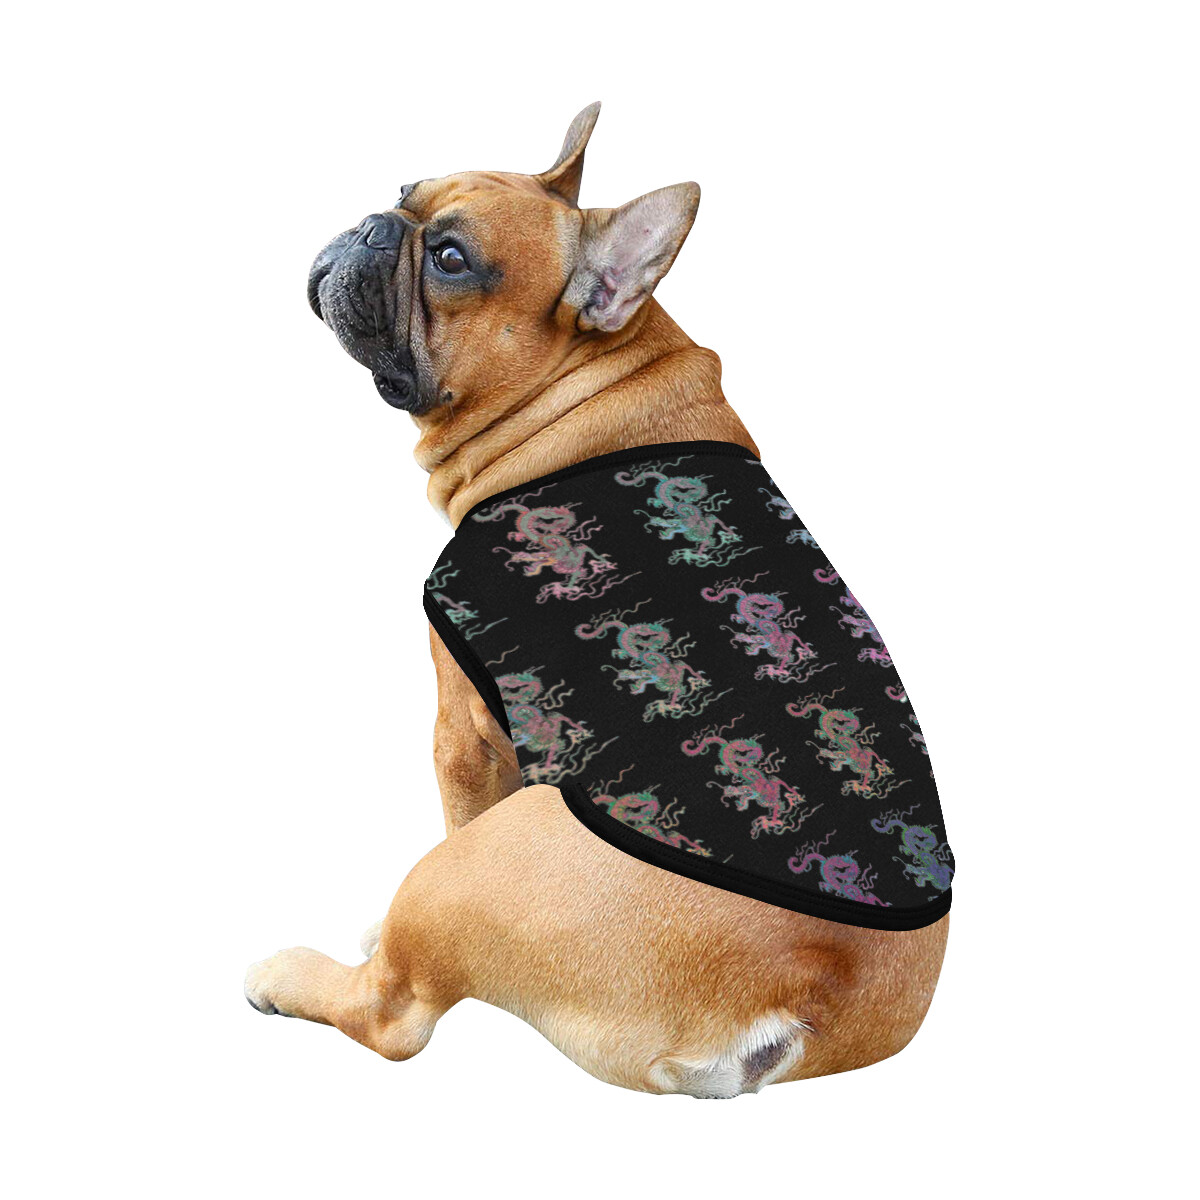 🐕 Flying Dragon pattern Dog shirt, Dog Tank Top, Dog t-shirt, Dog clothes, Gifts, front back print, 7 sizes XS to 3XL, dog gifts, black